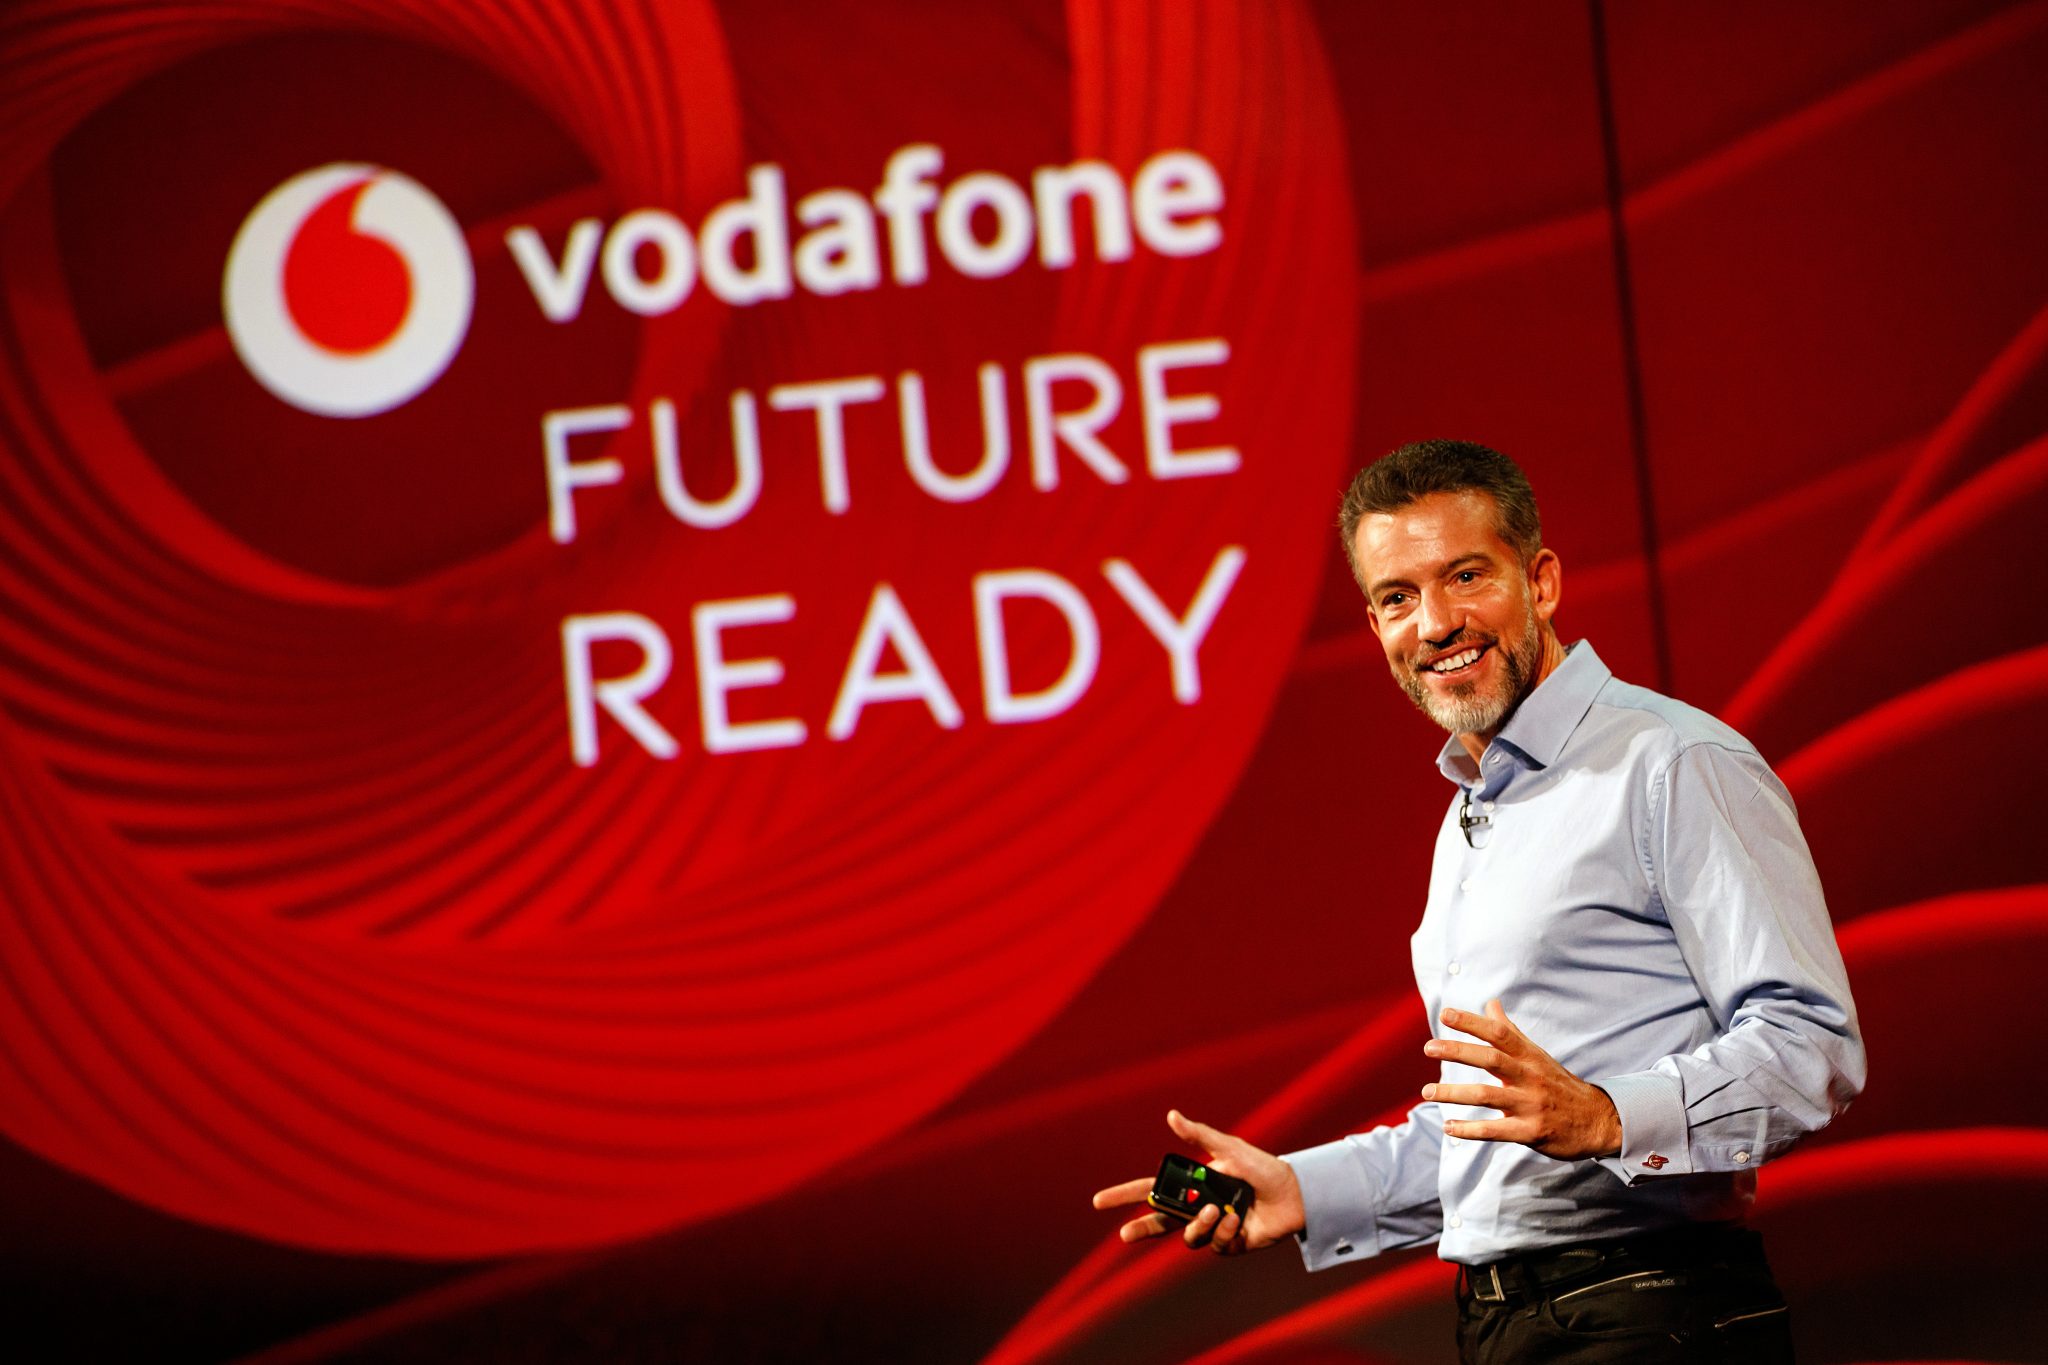 Nick Jeffery, Vodafone CEO speaking at Vodafone Newbury, 20 September 2017